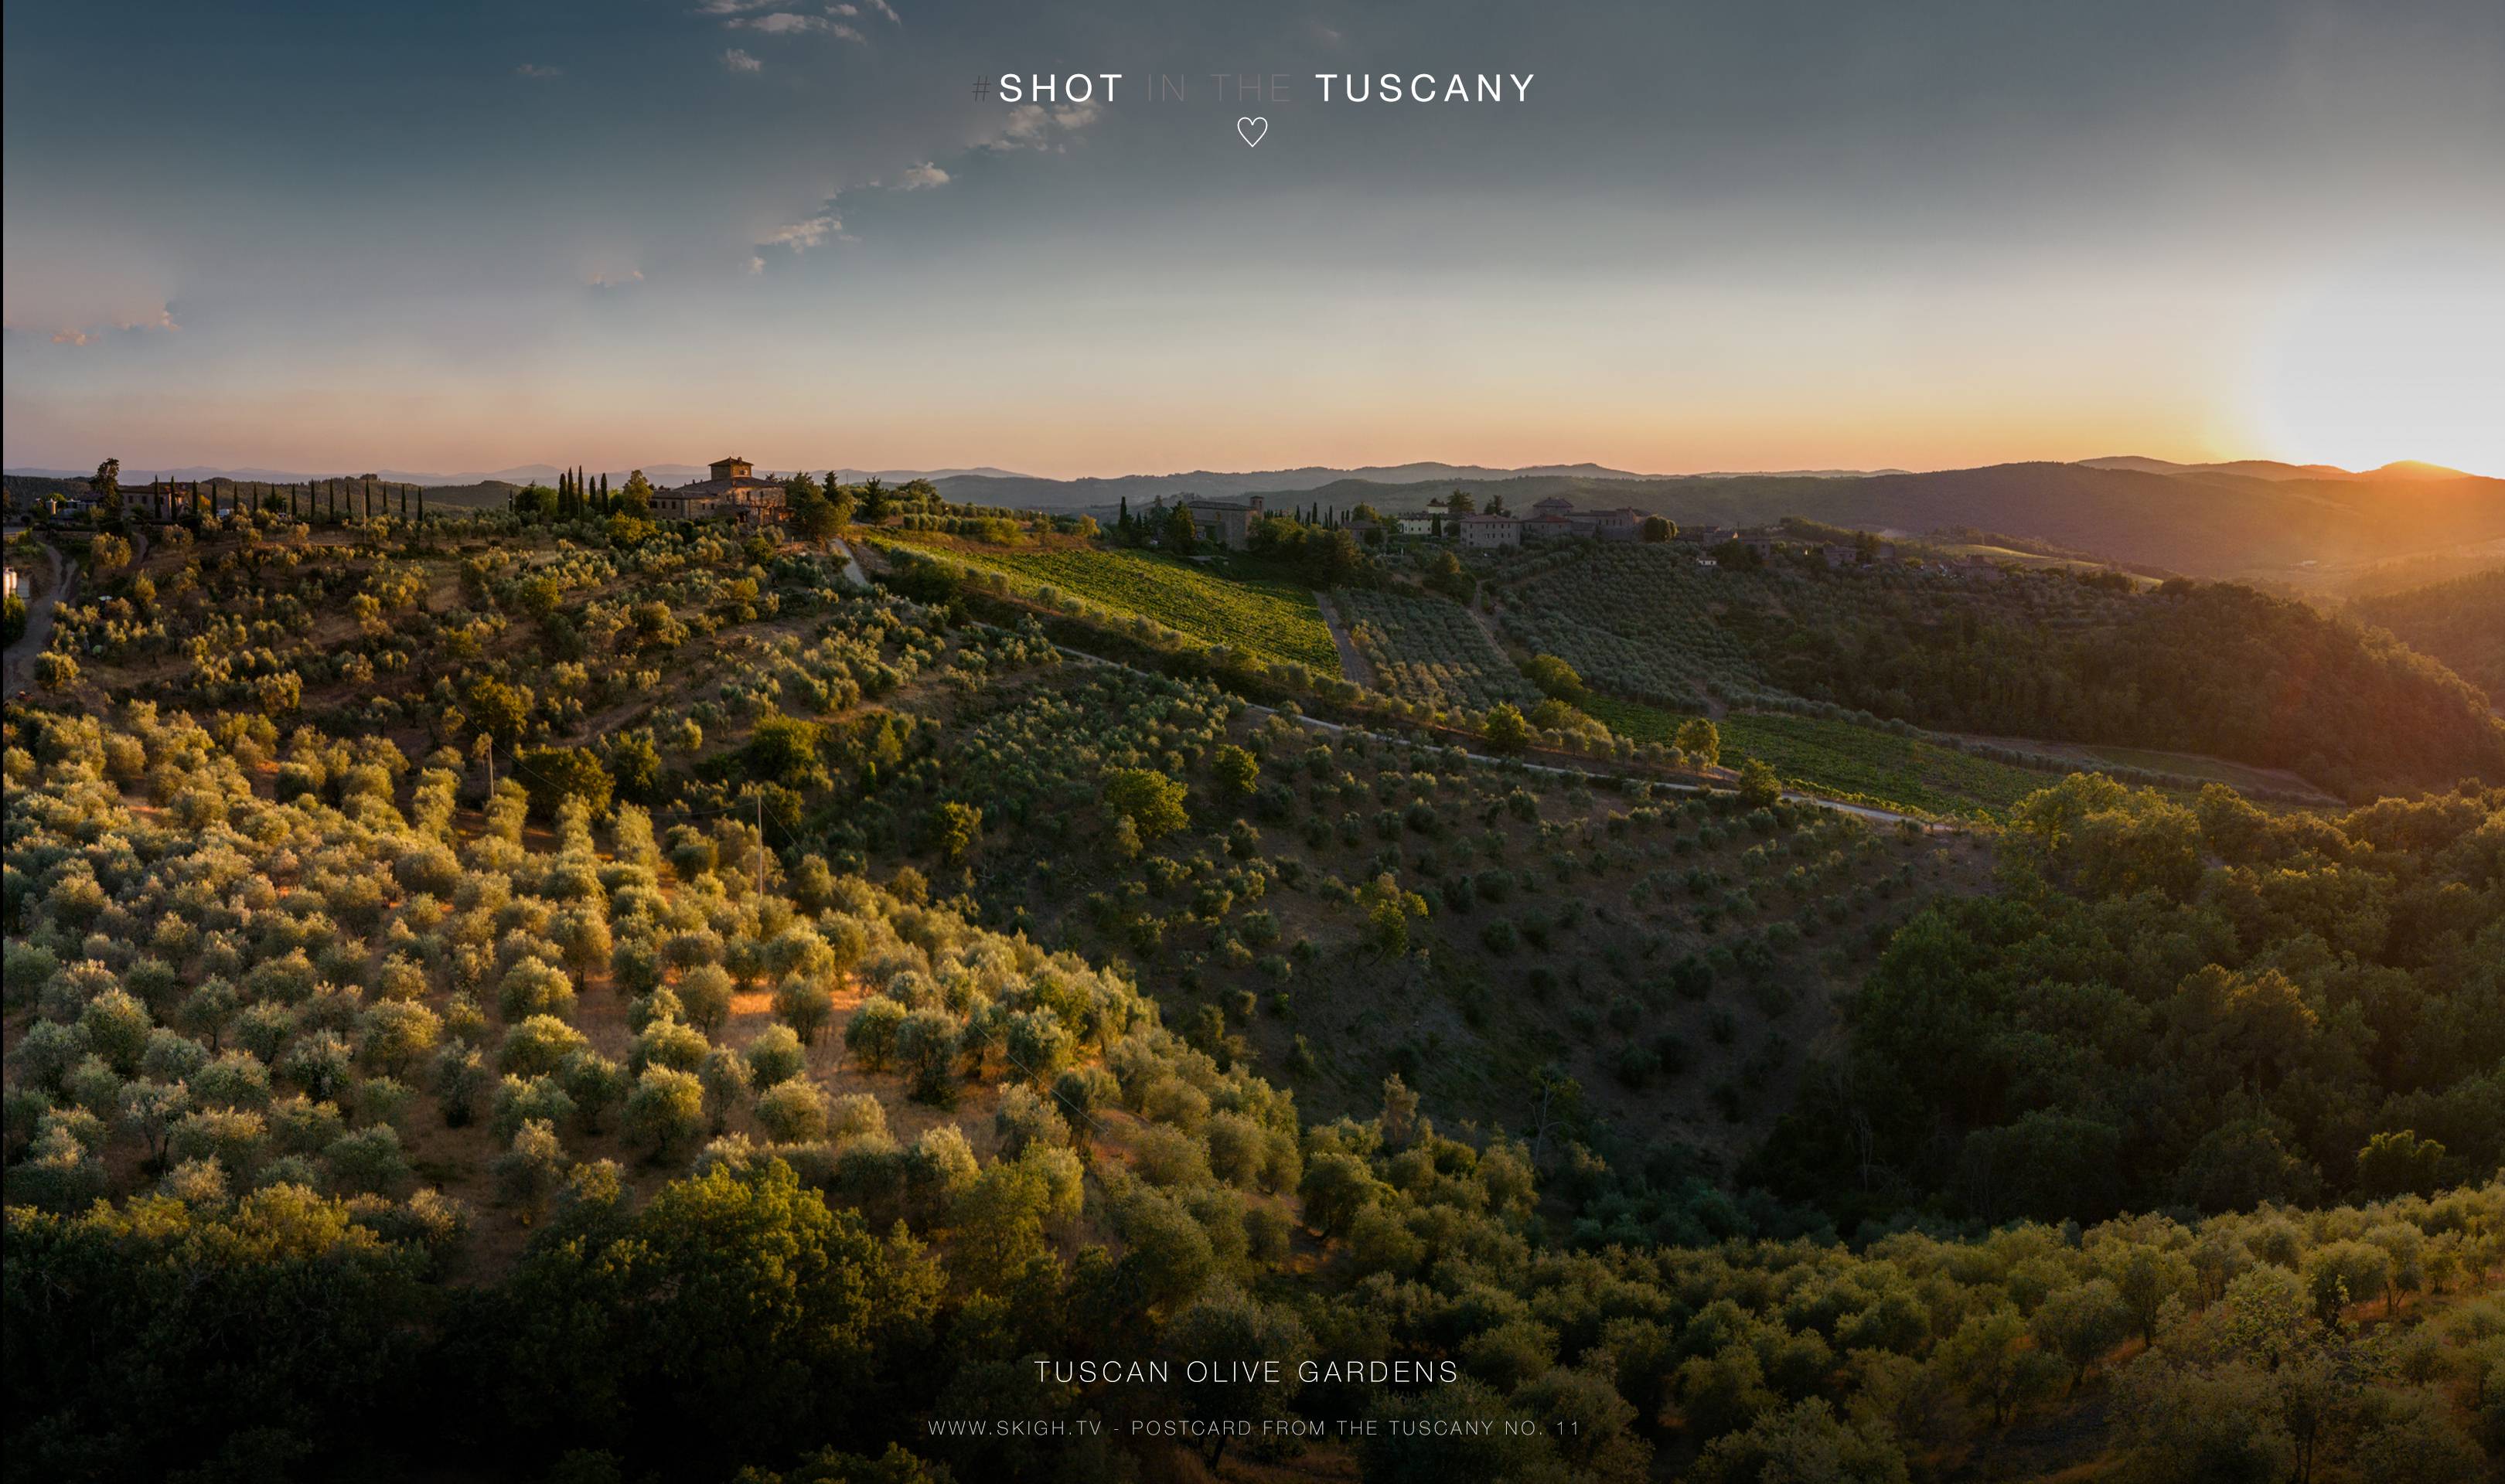 Tuscan olive gardens